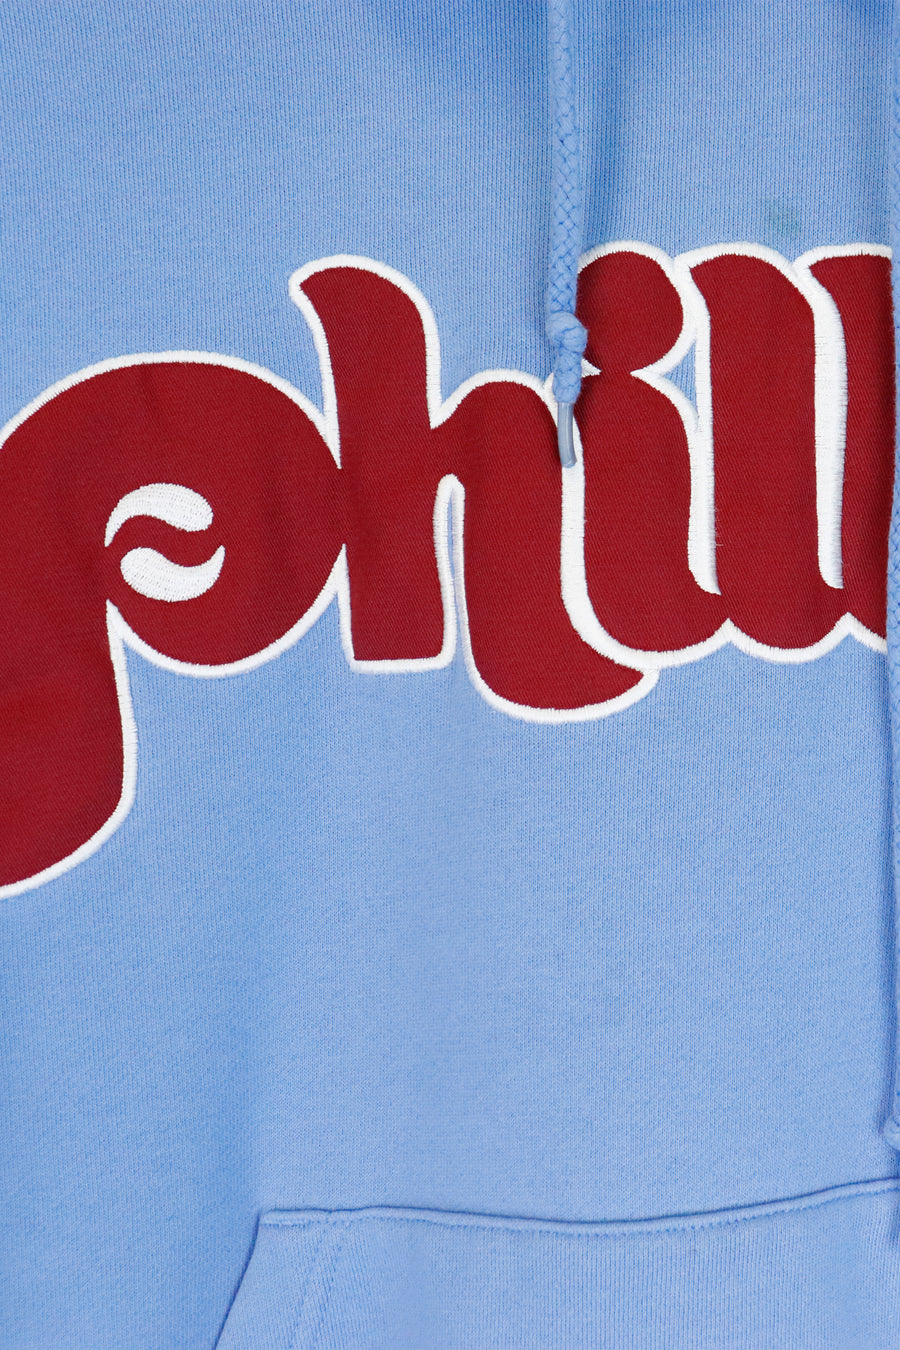 Vintage MLB Phillies Patched Hoodie Sz XL